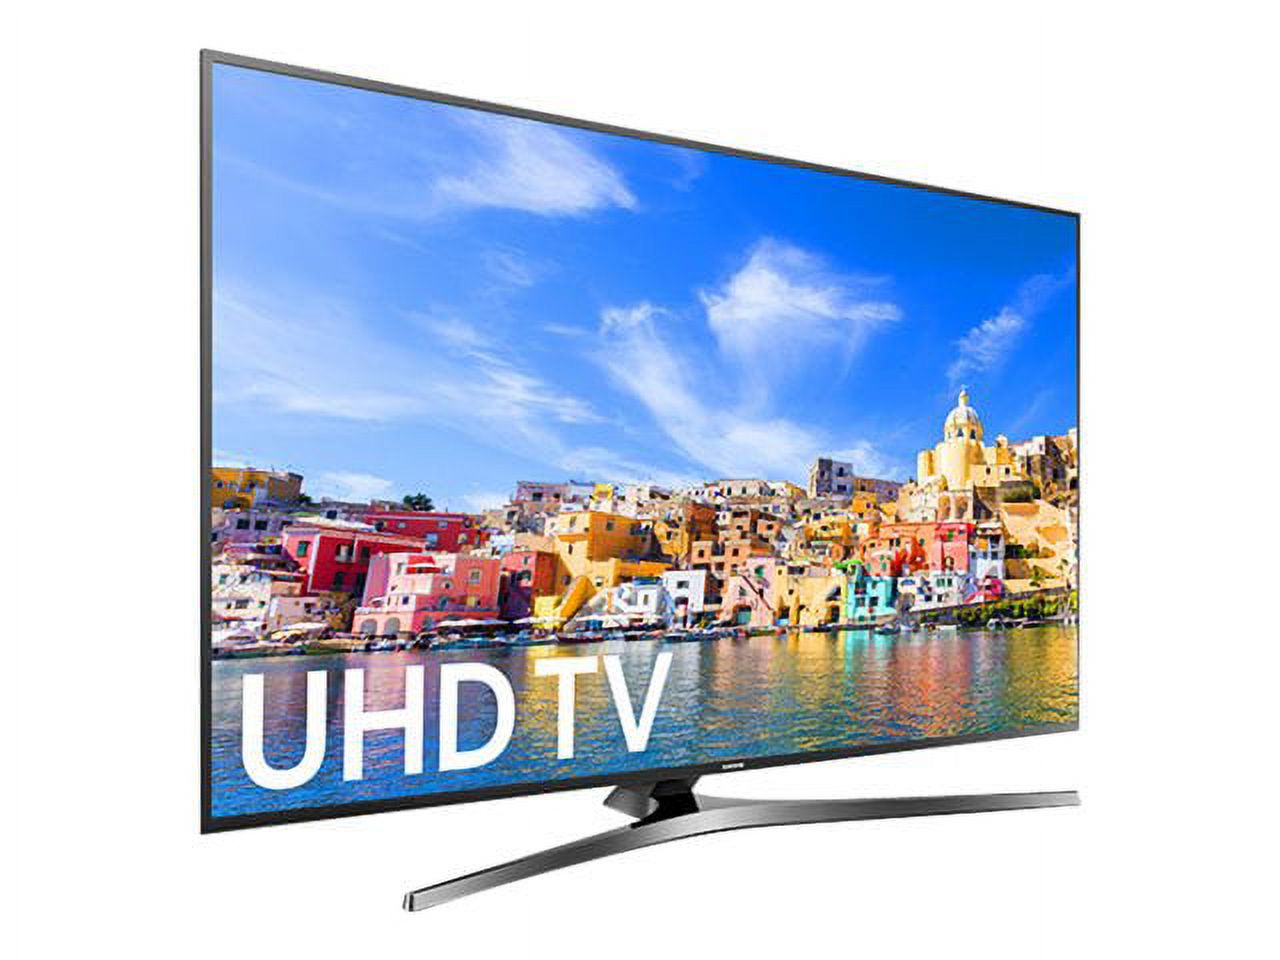 Samsung 40" Class Smart LED-LCD TV (UN40KU7000F) - image 3 of 23